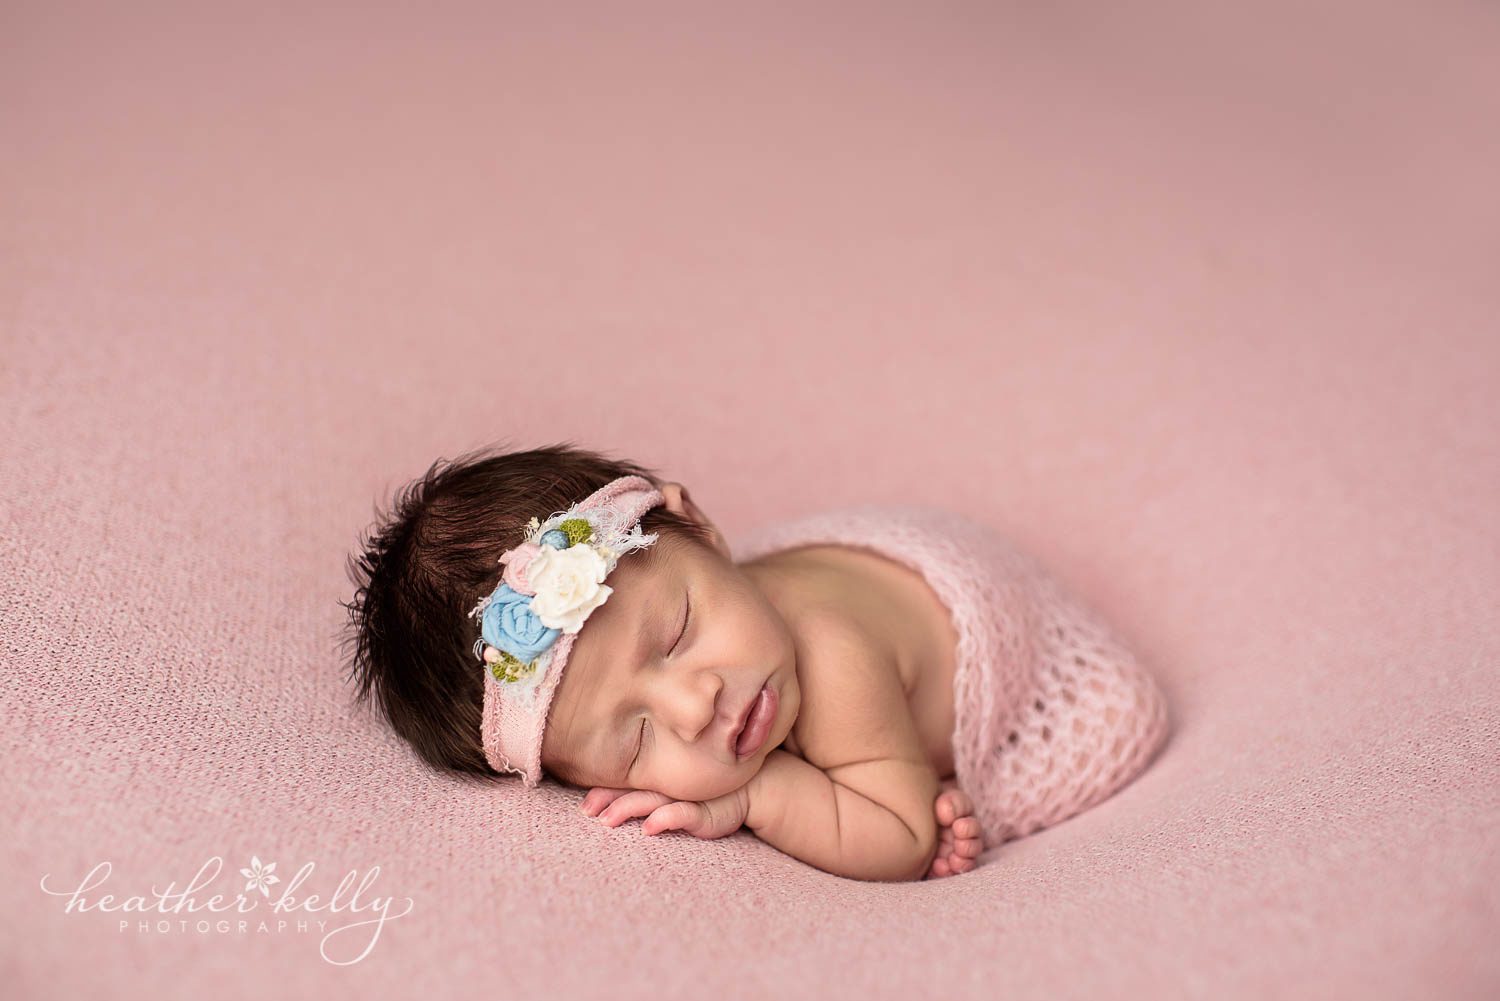 taco pose newborn photography. baby girl with pink wrap. monroe ct newborn photography